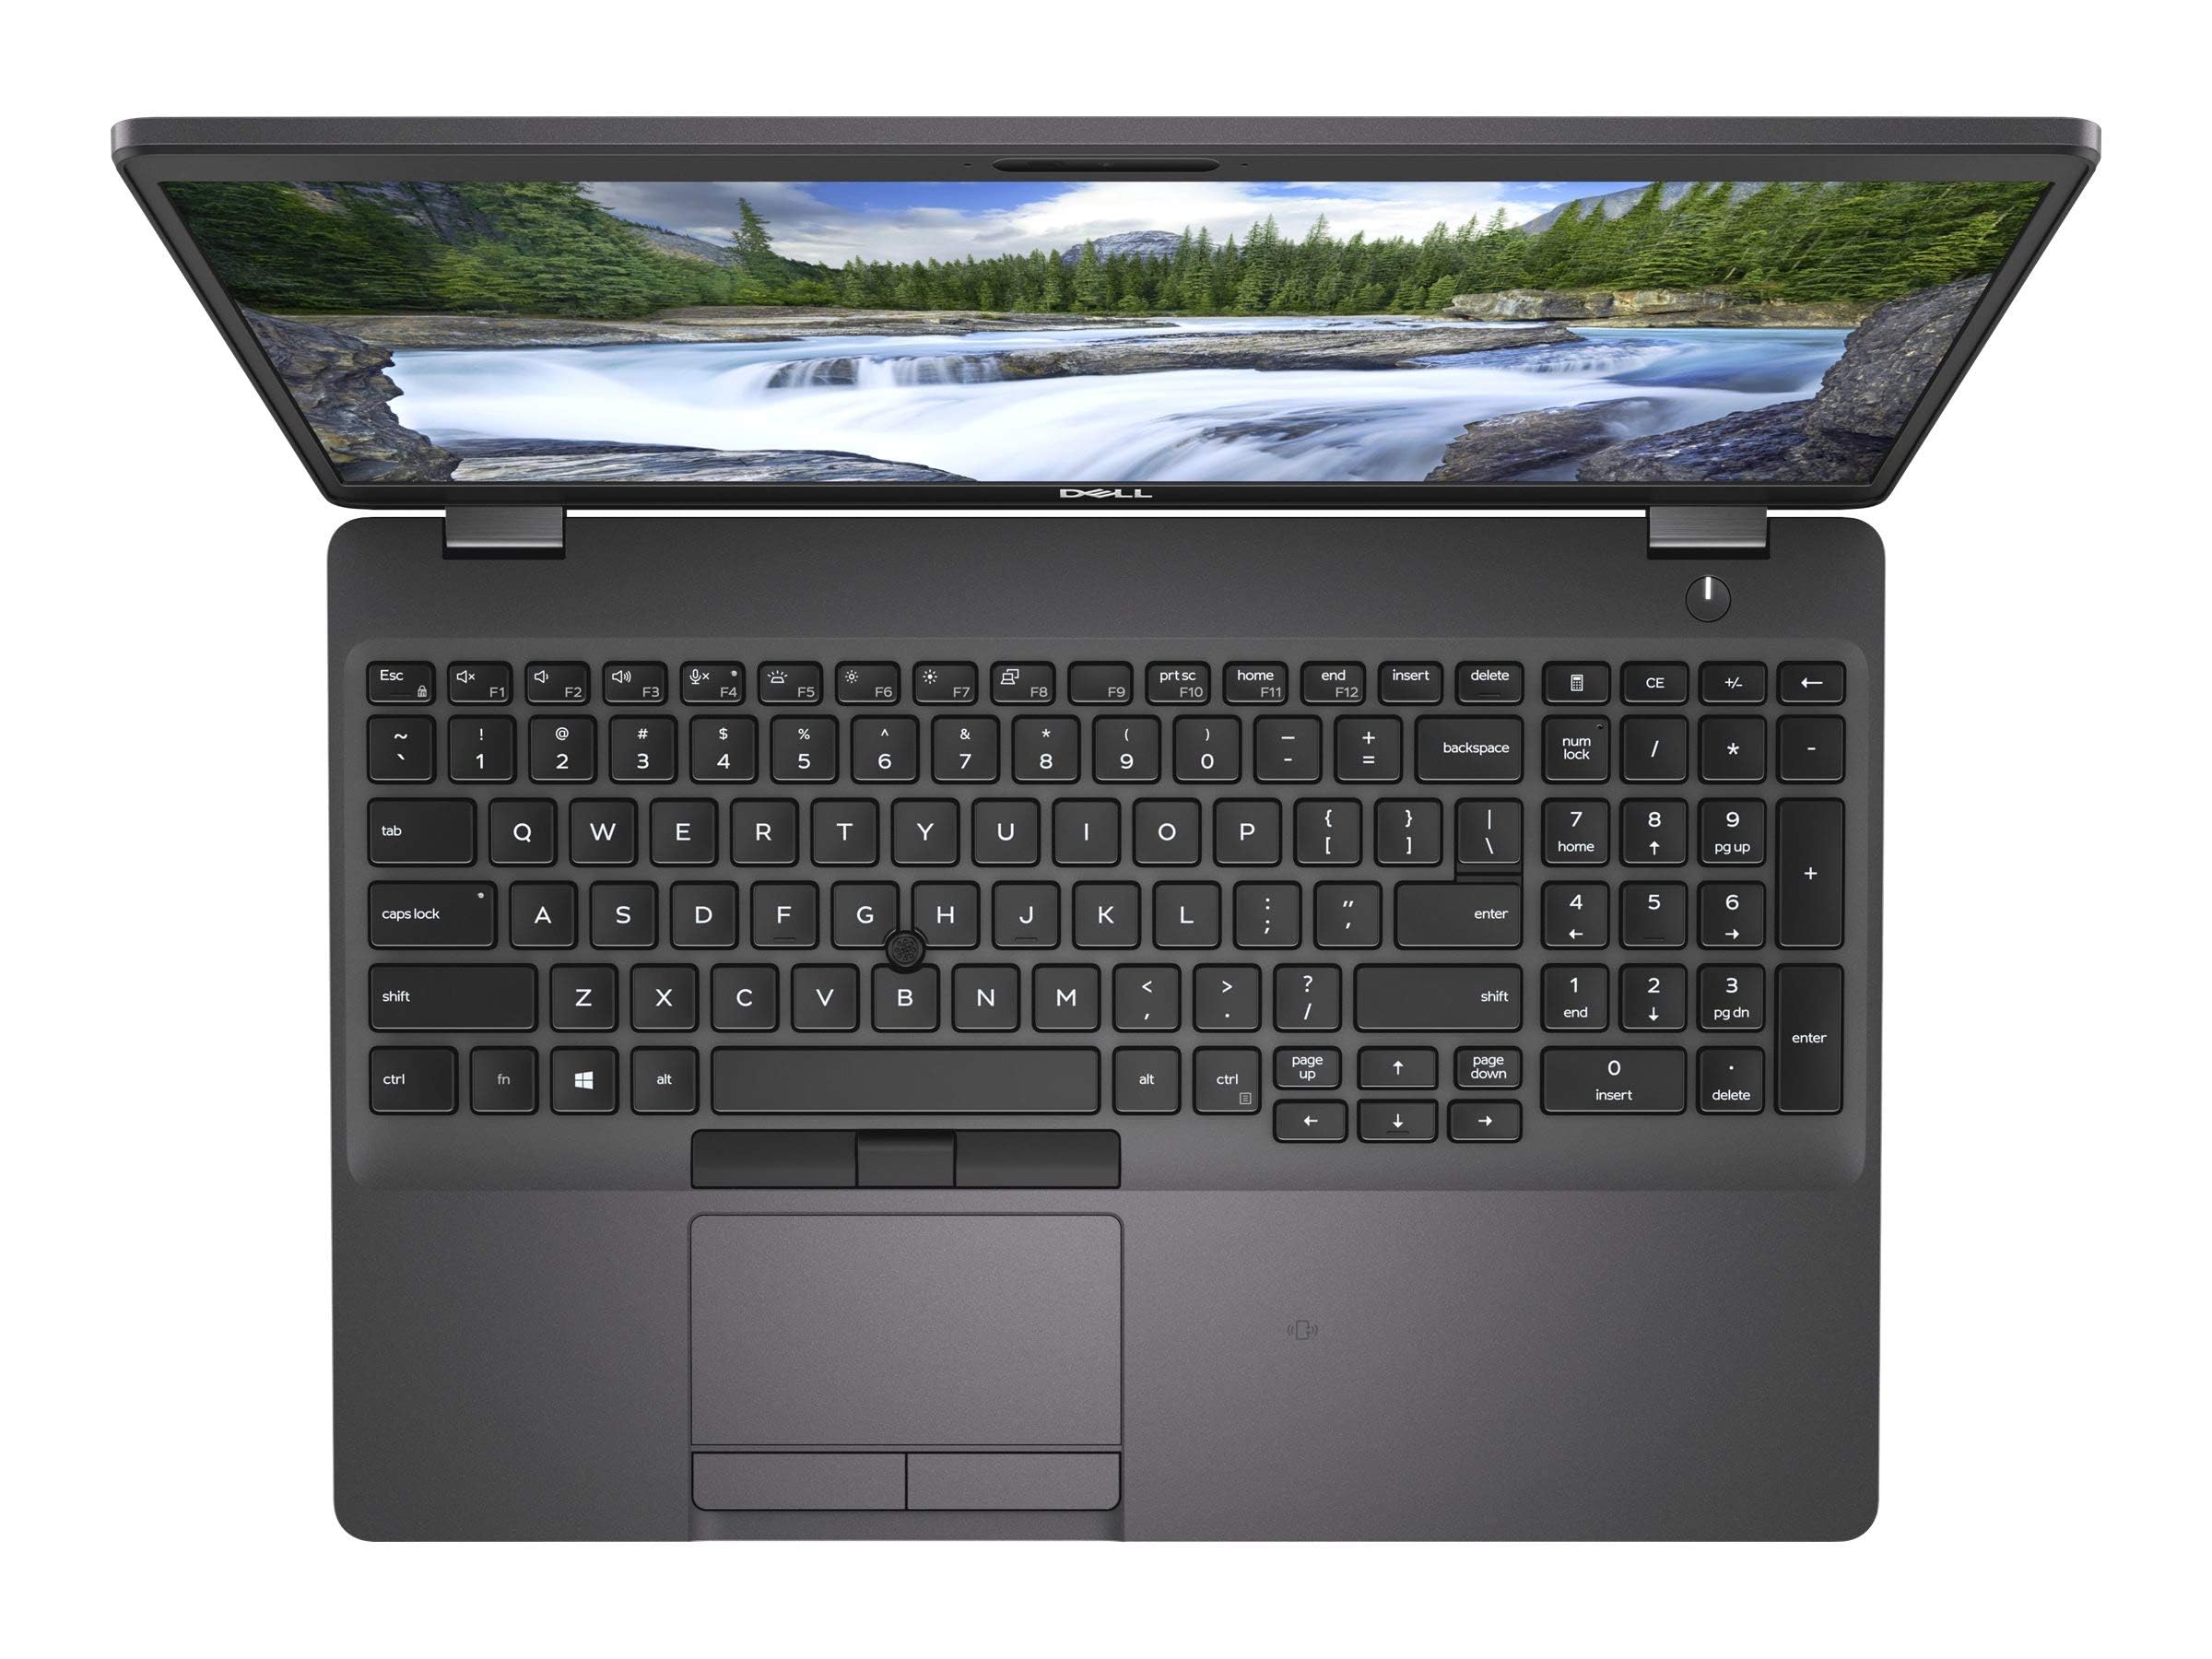 DELL Laptops Dell Latitude 5500 Core i7 8GB 256GB 15" laptop (Renewed)